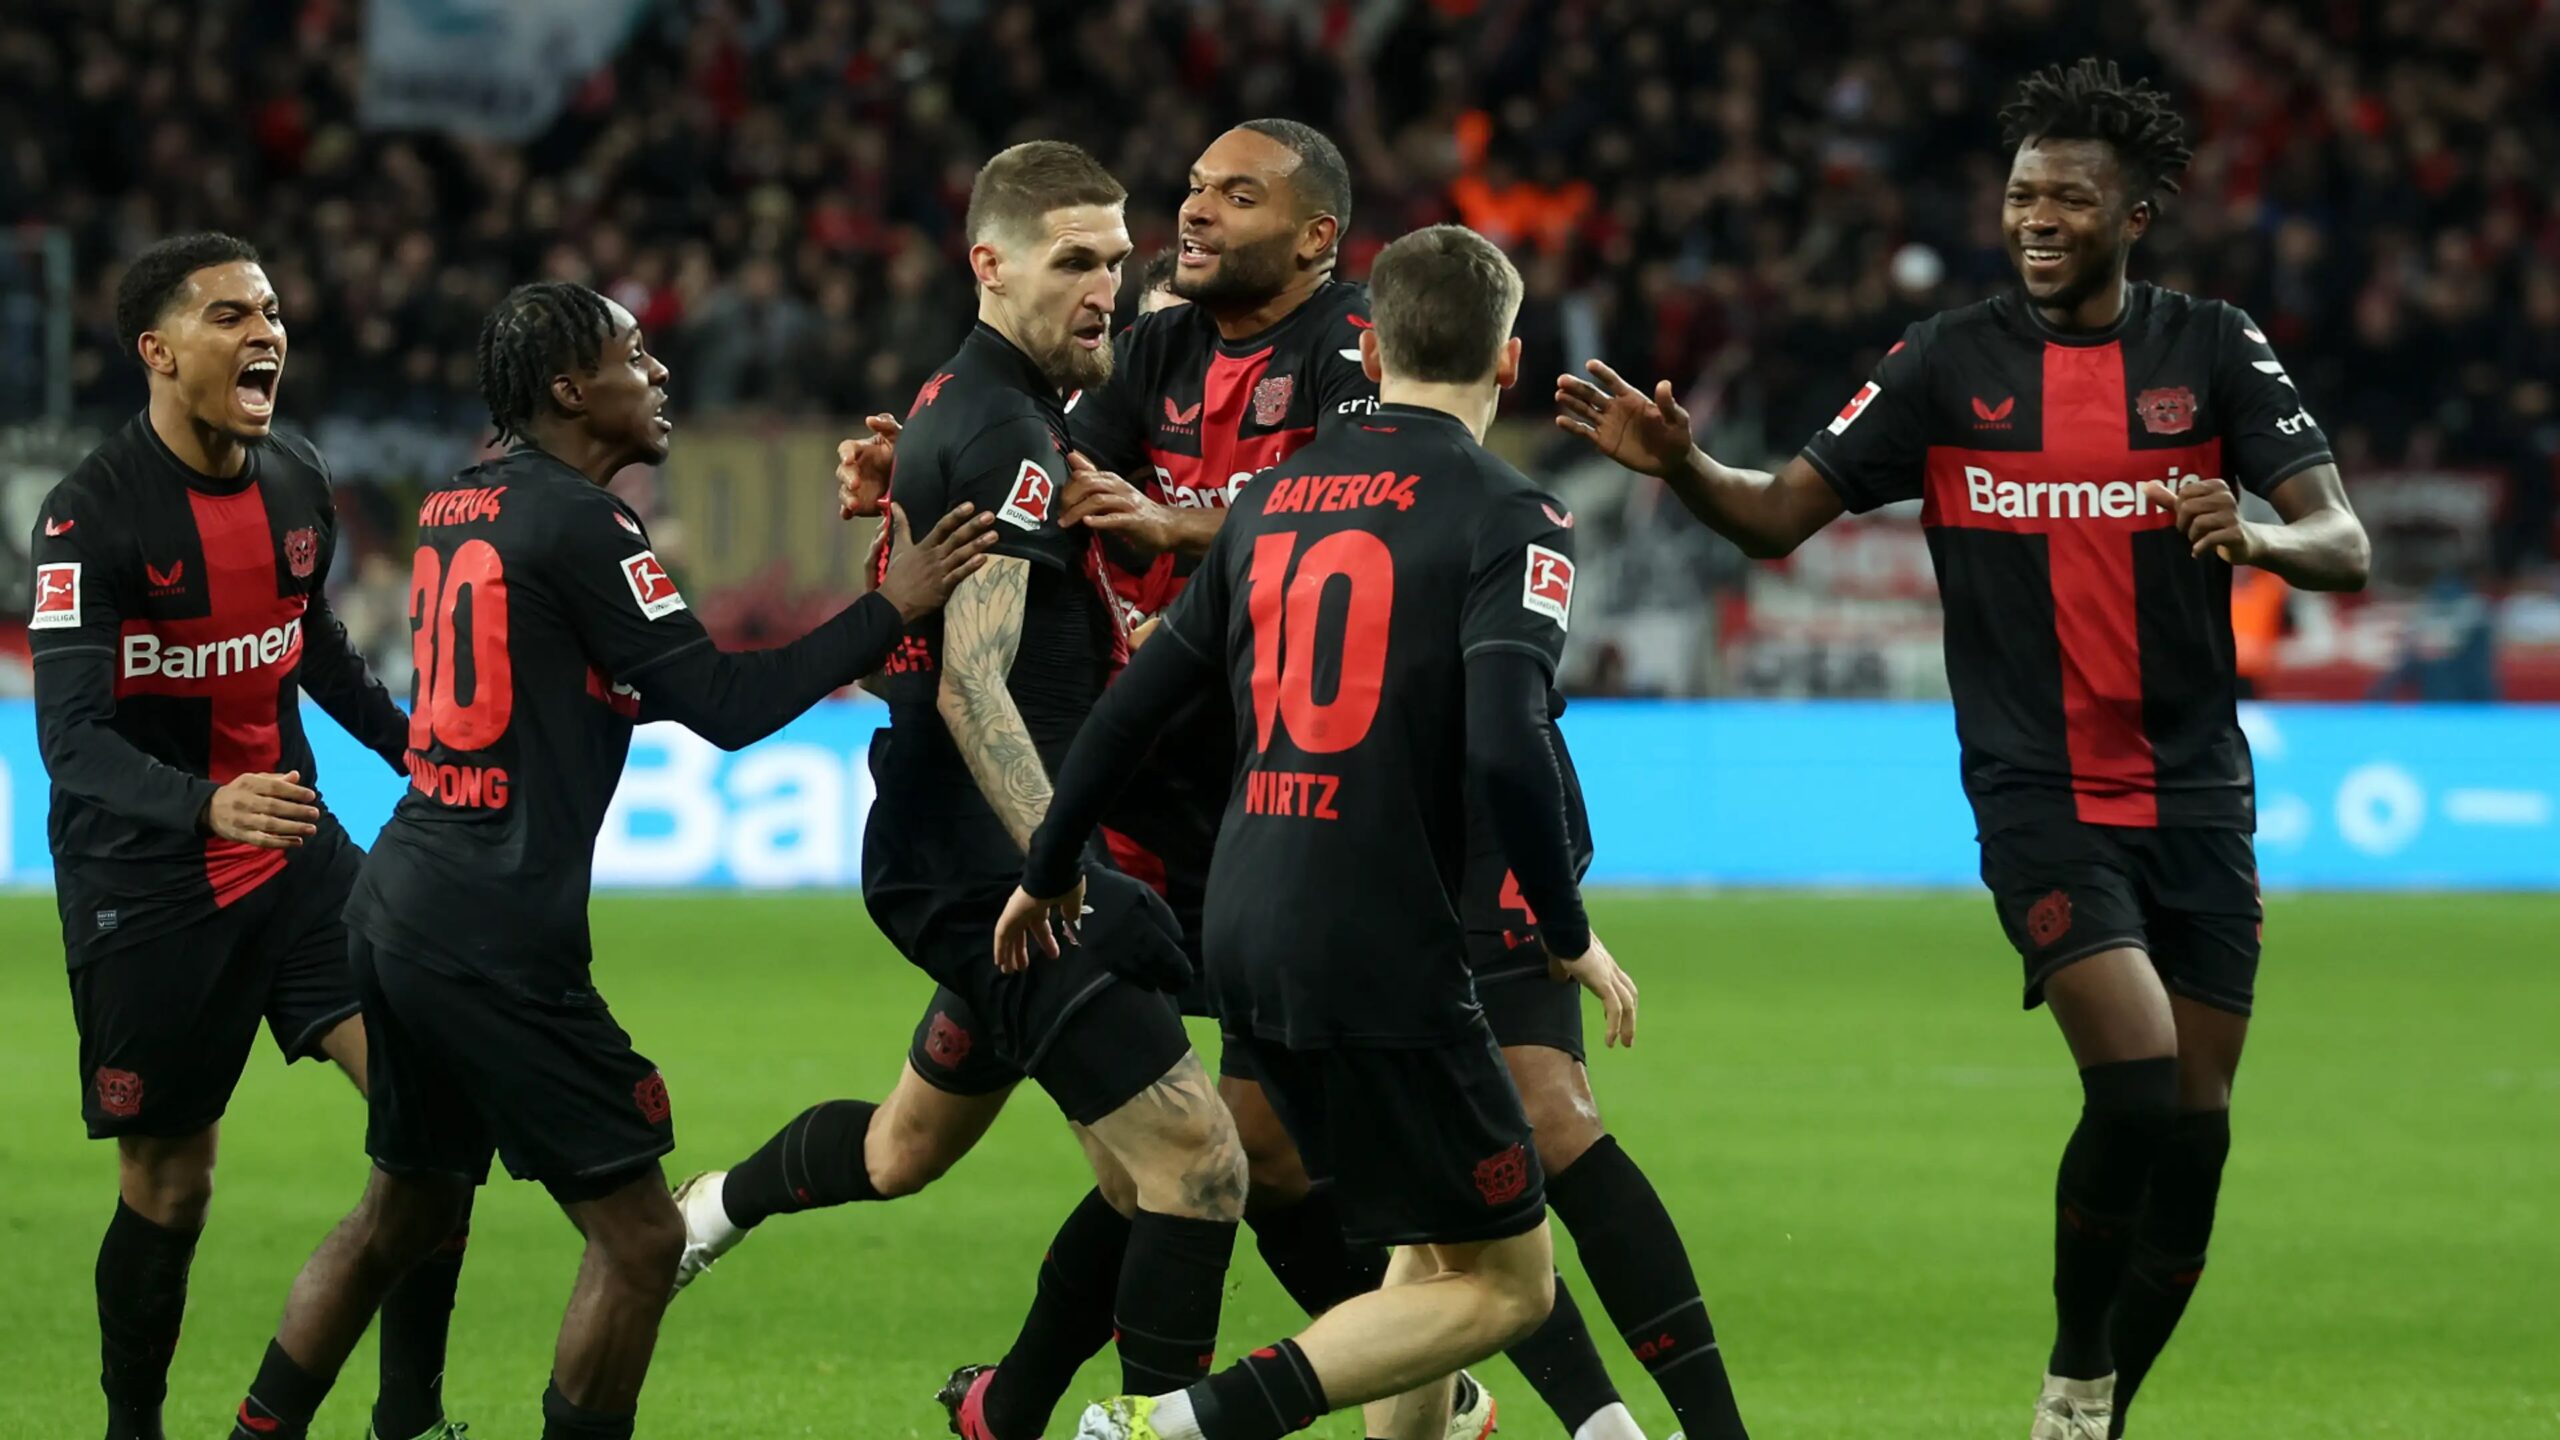 Bayer Leverkusen staged a thrilling comeback to secure a 2-1 victory over Hoffenheim | Bundesliga